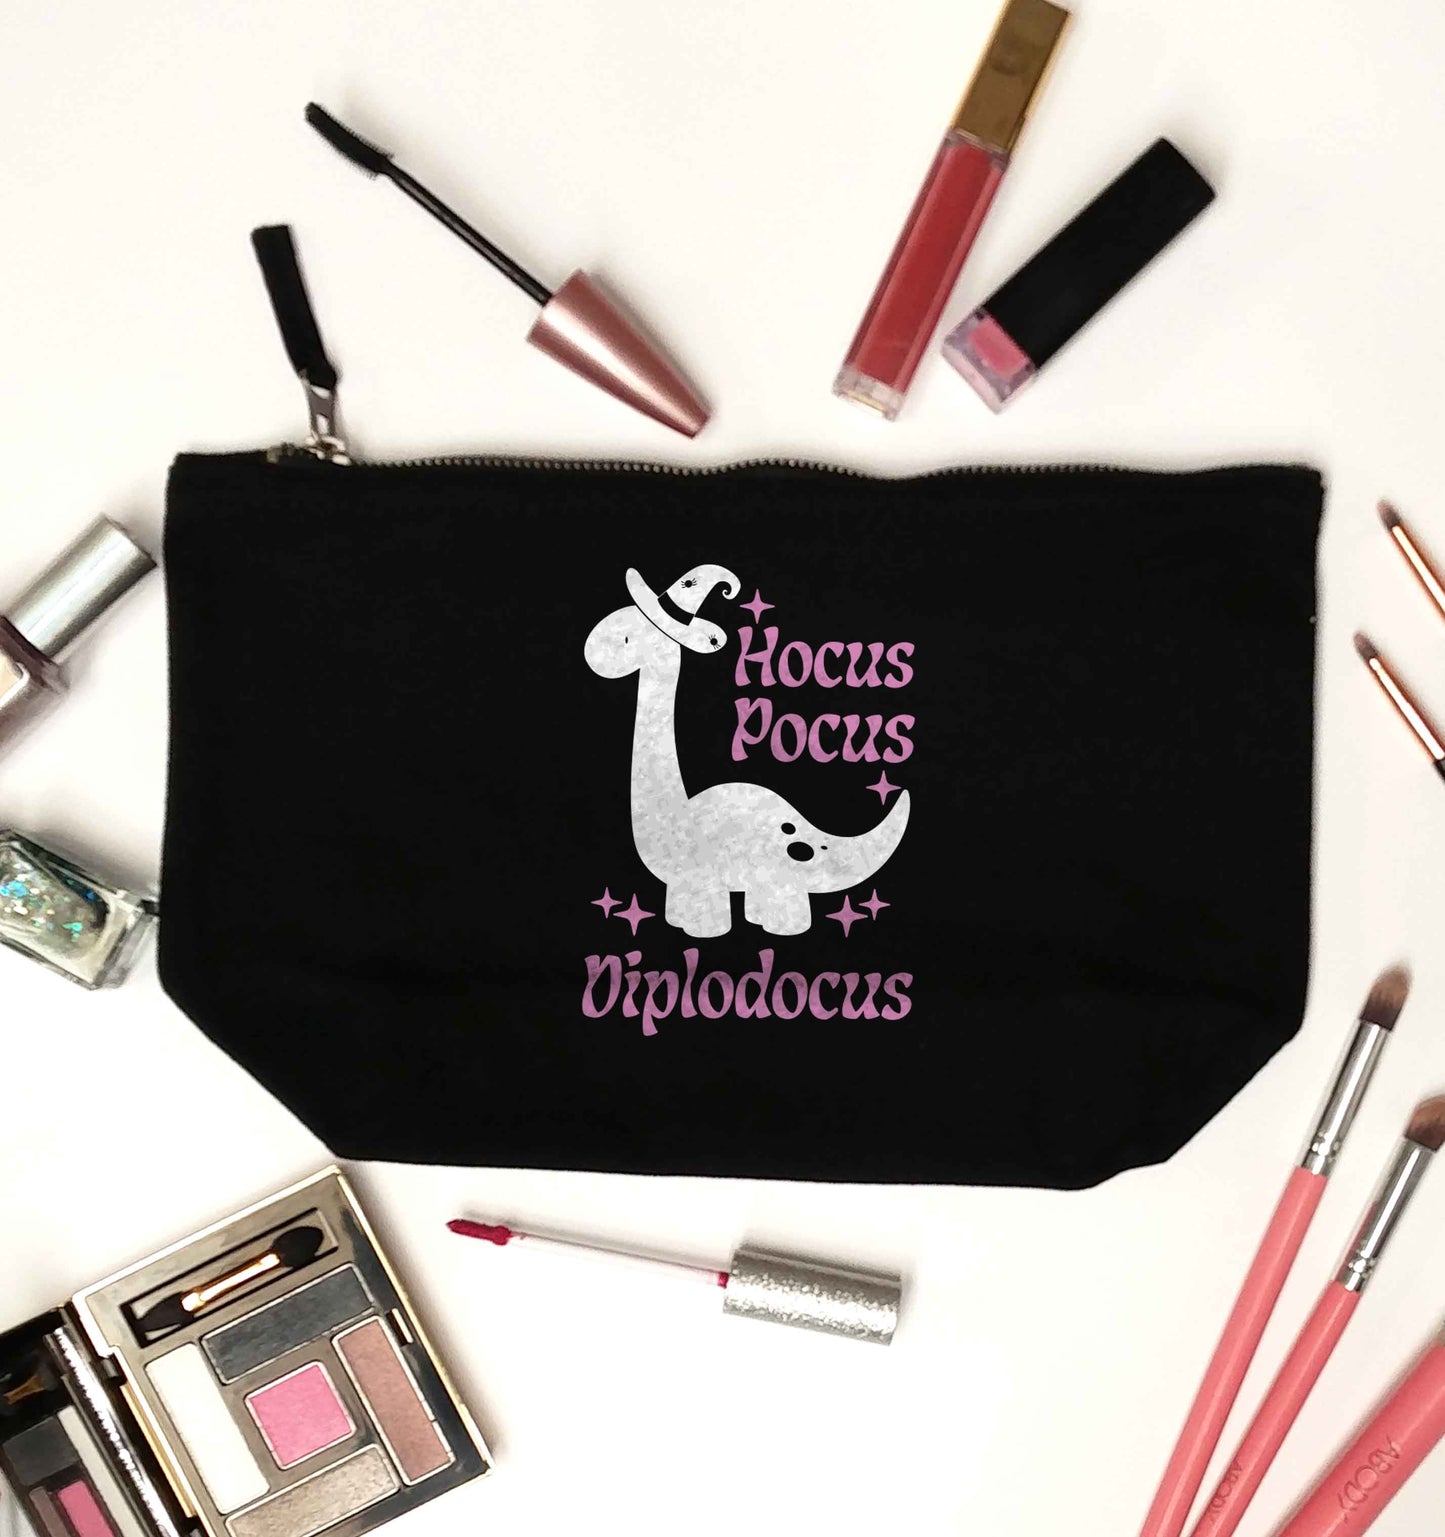 Hocus pocus diplodocus Kit black makeup bag